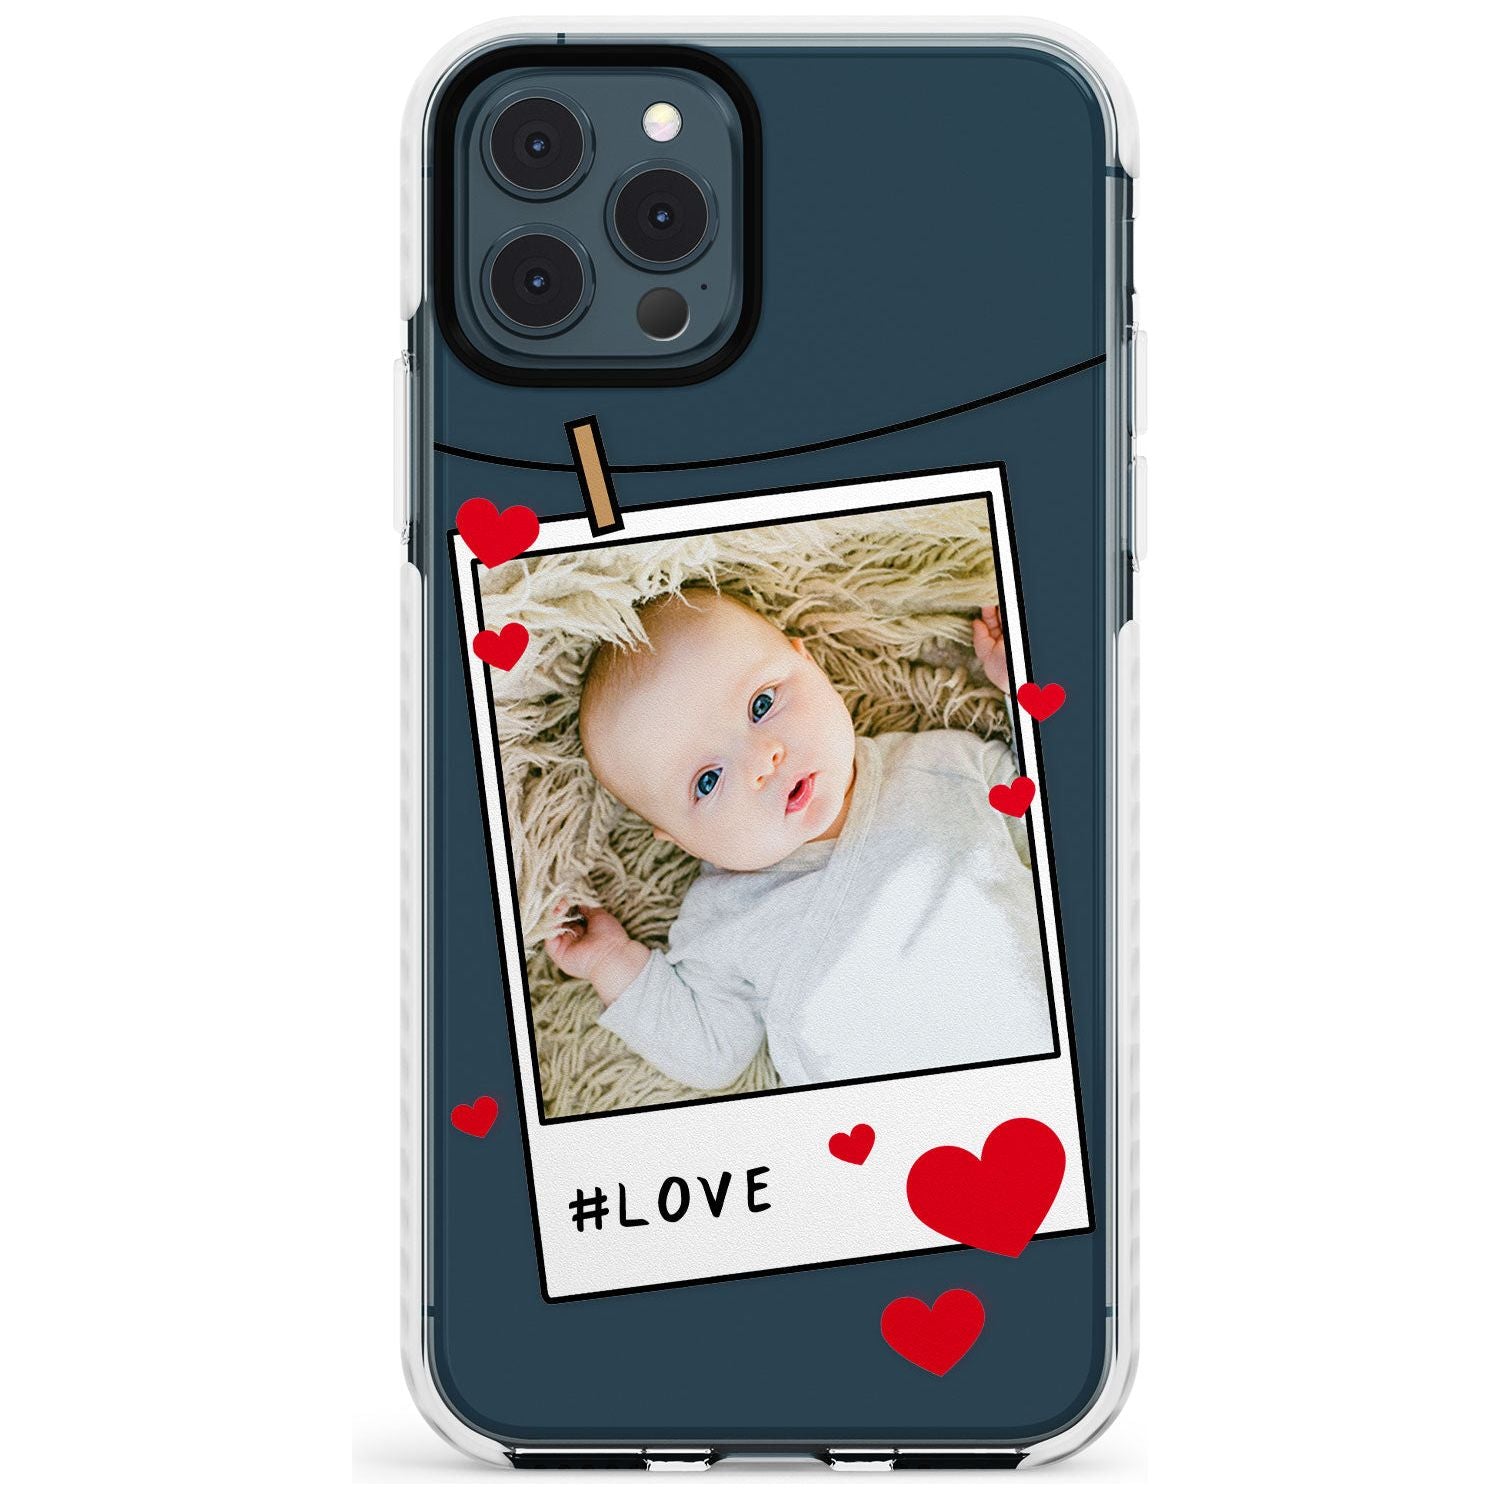 Love Instant Film Slim TPU Phone Case for iPhone 11 Pro Max